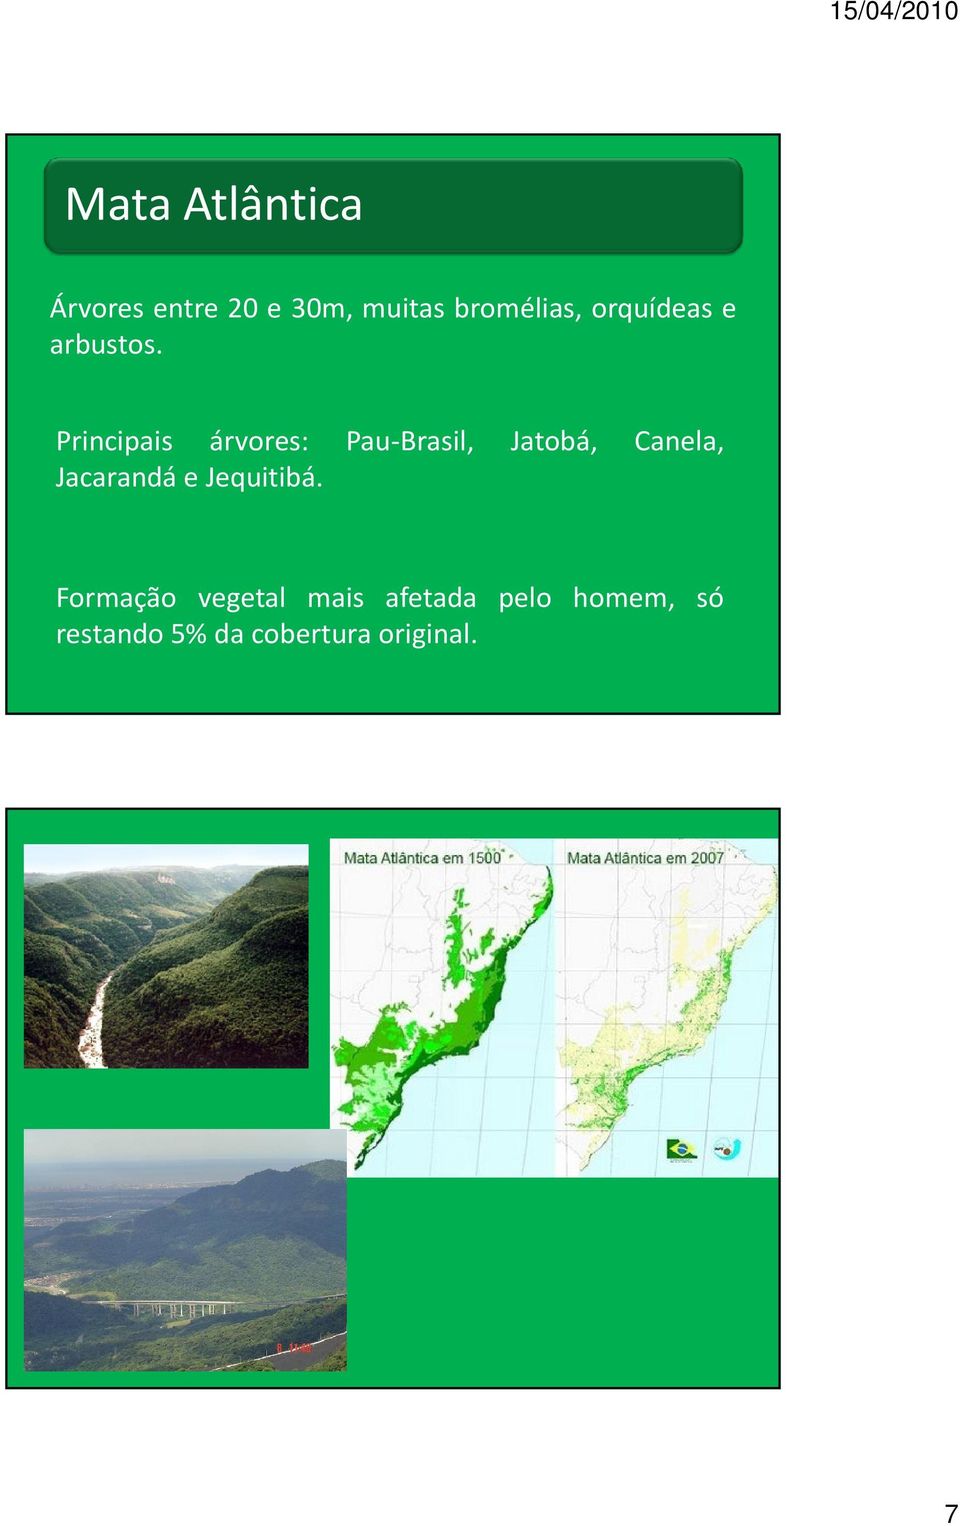 Principais árvores: Pau-Brasil, Jatobá, Canela, Jacarandá